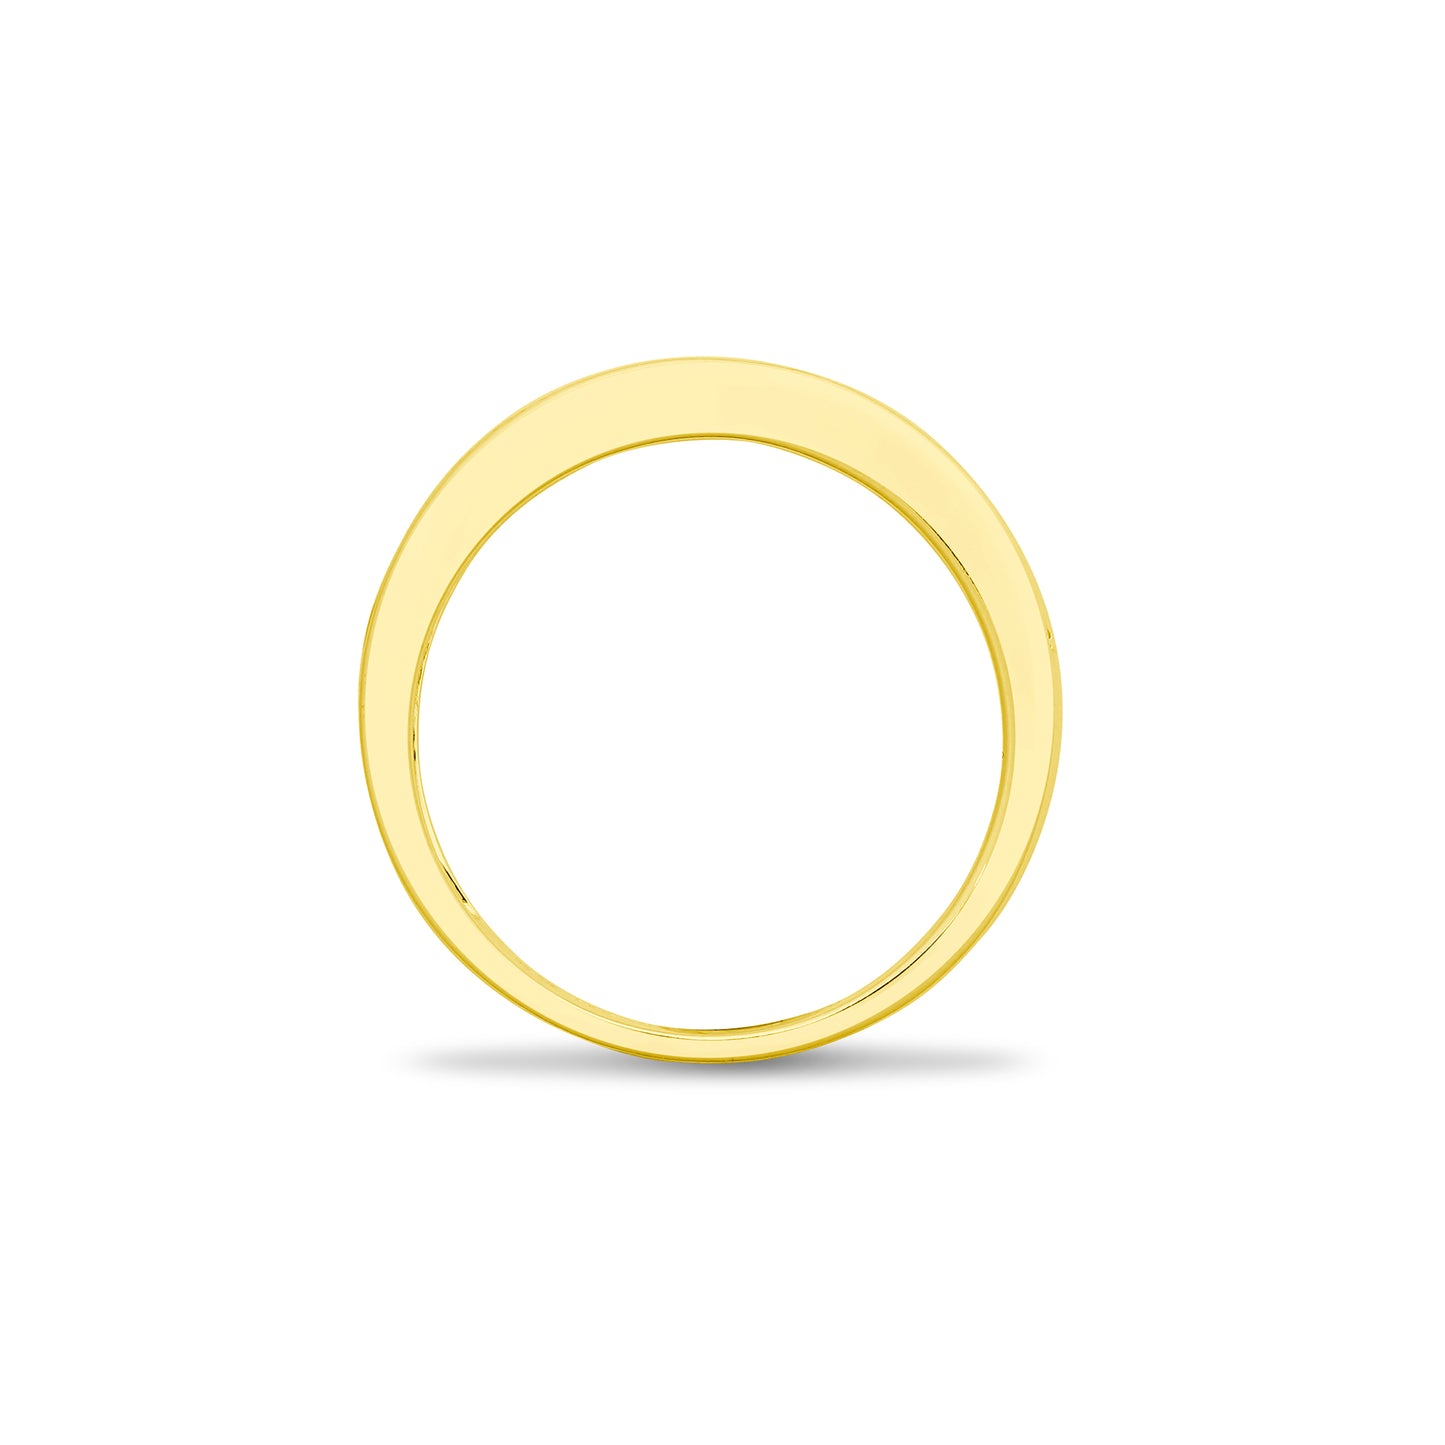 18ct Gold  0.5ct Diamond Dainty Band Eternity Ring - 18R895-050